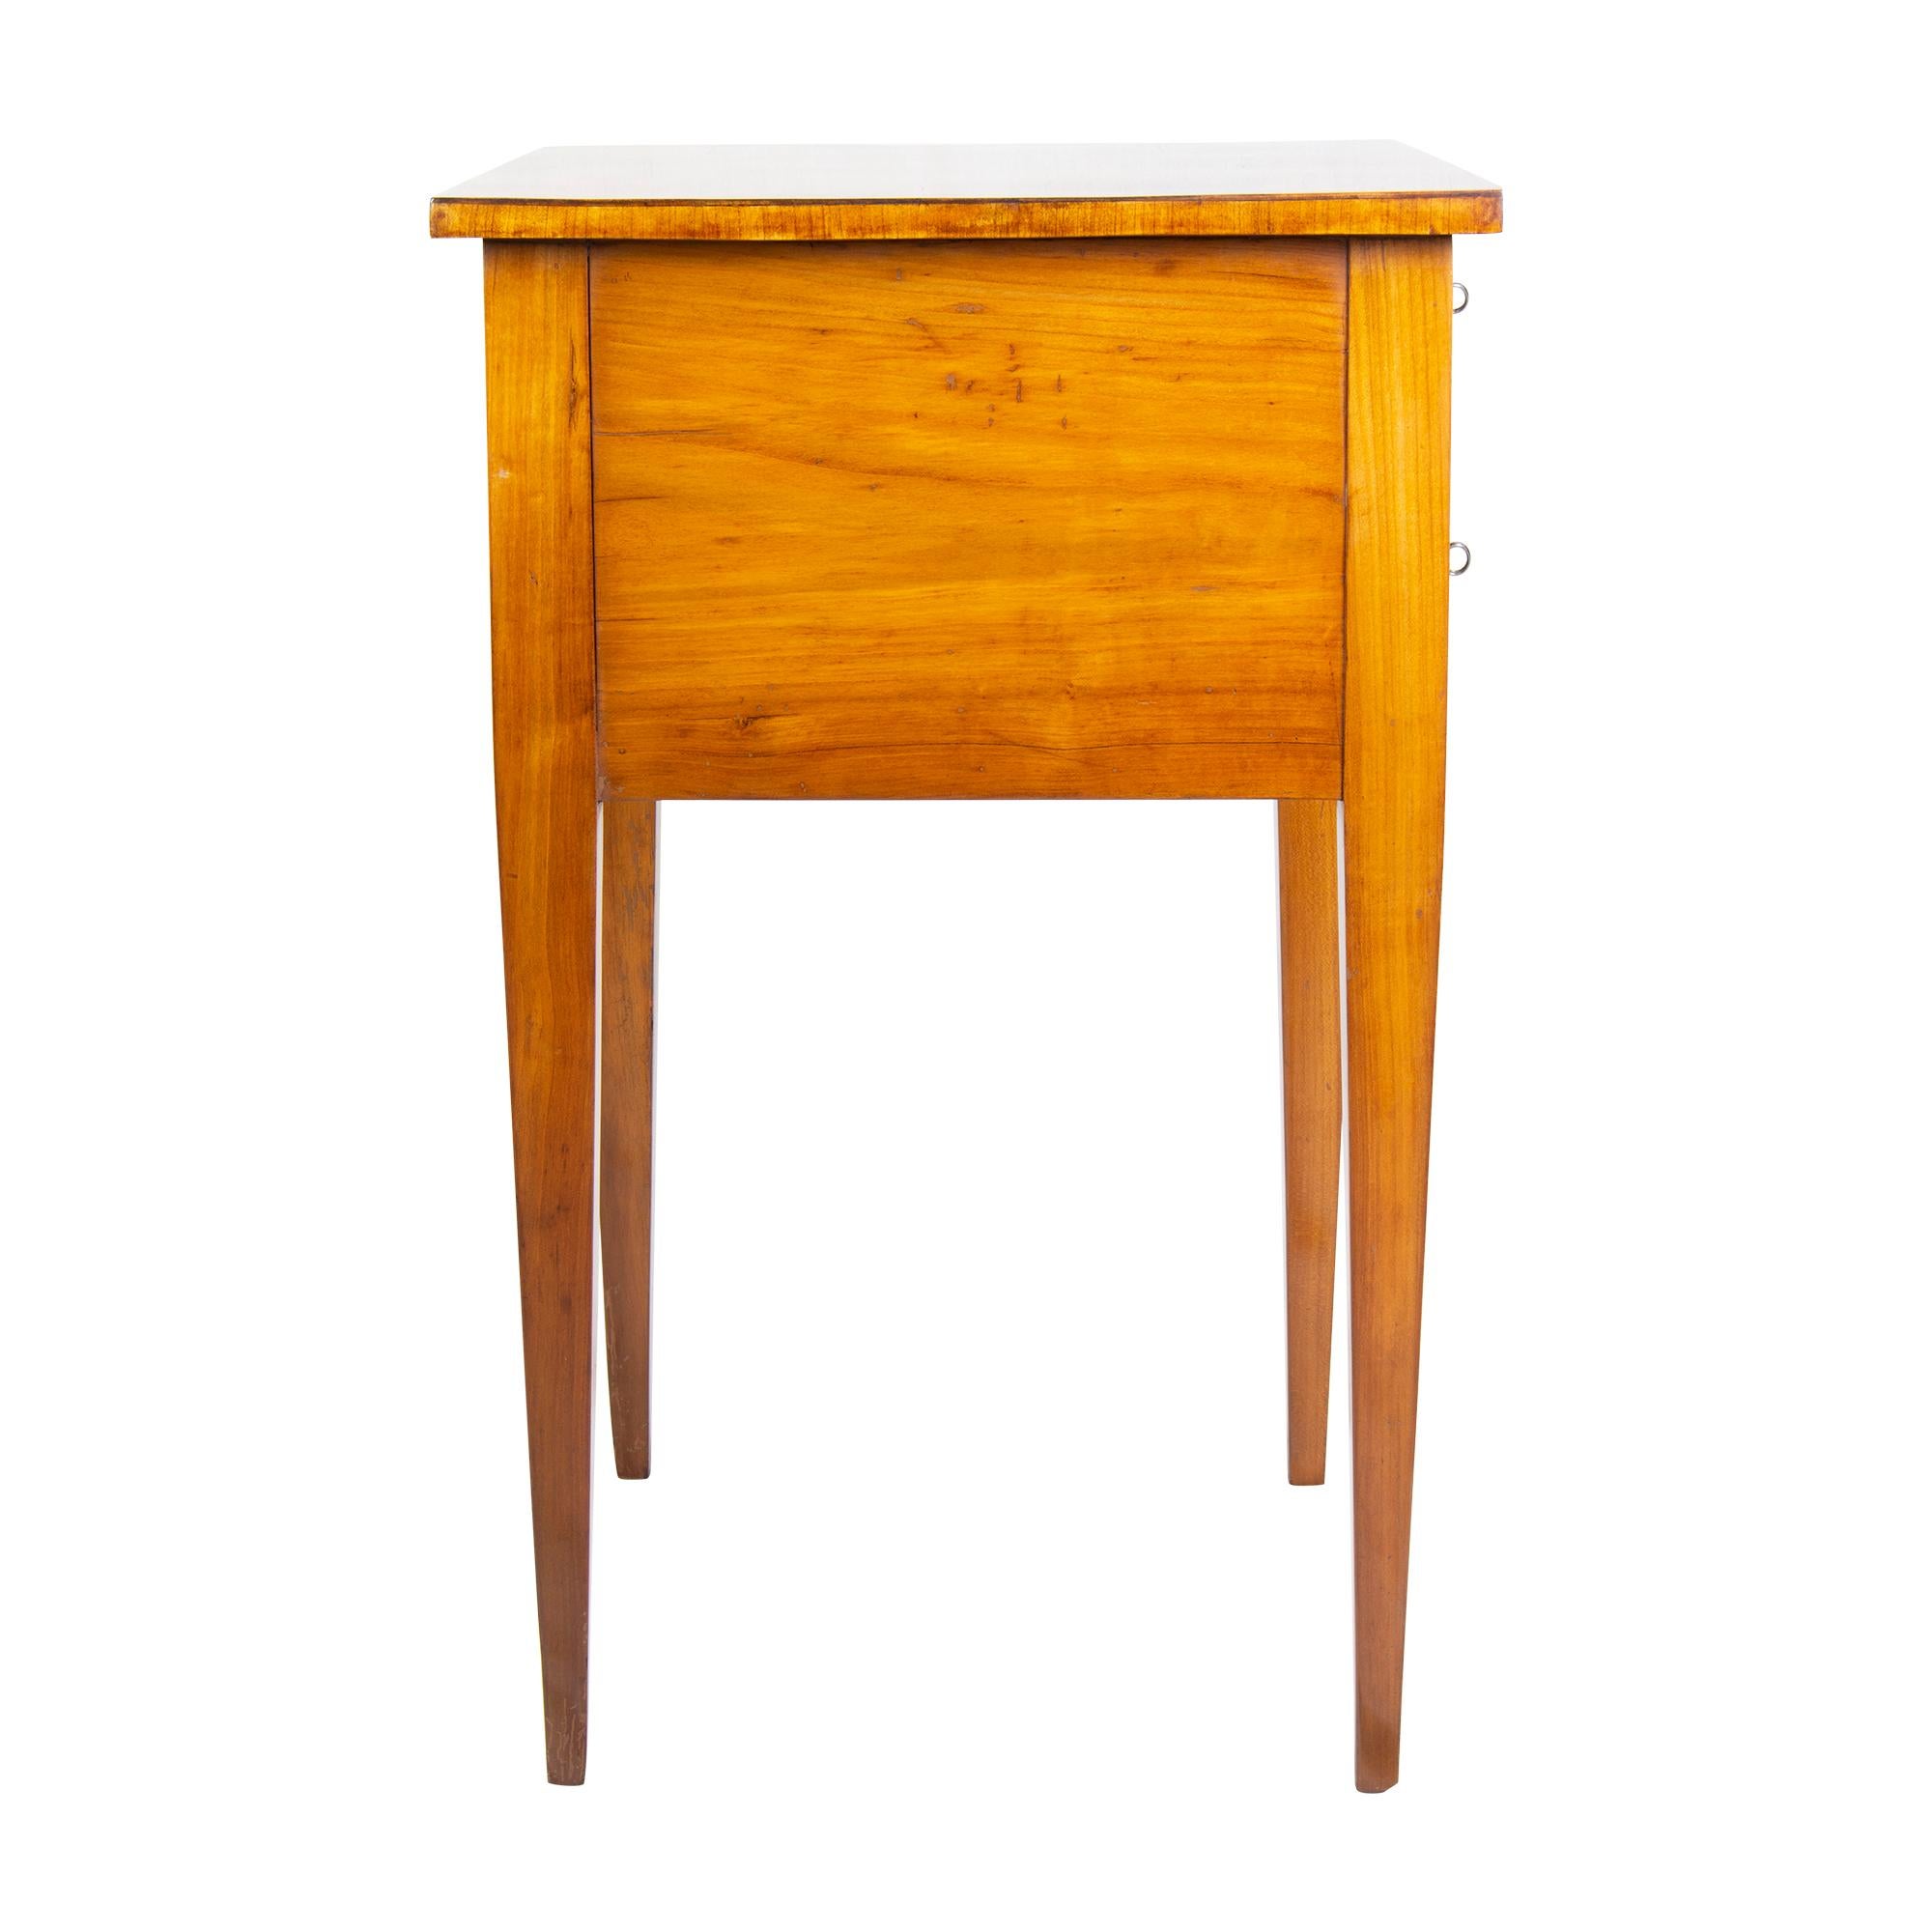 Polished 19th Century Biedermeier Cherrywood 2-Drawer Side Table